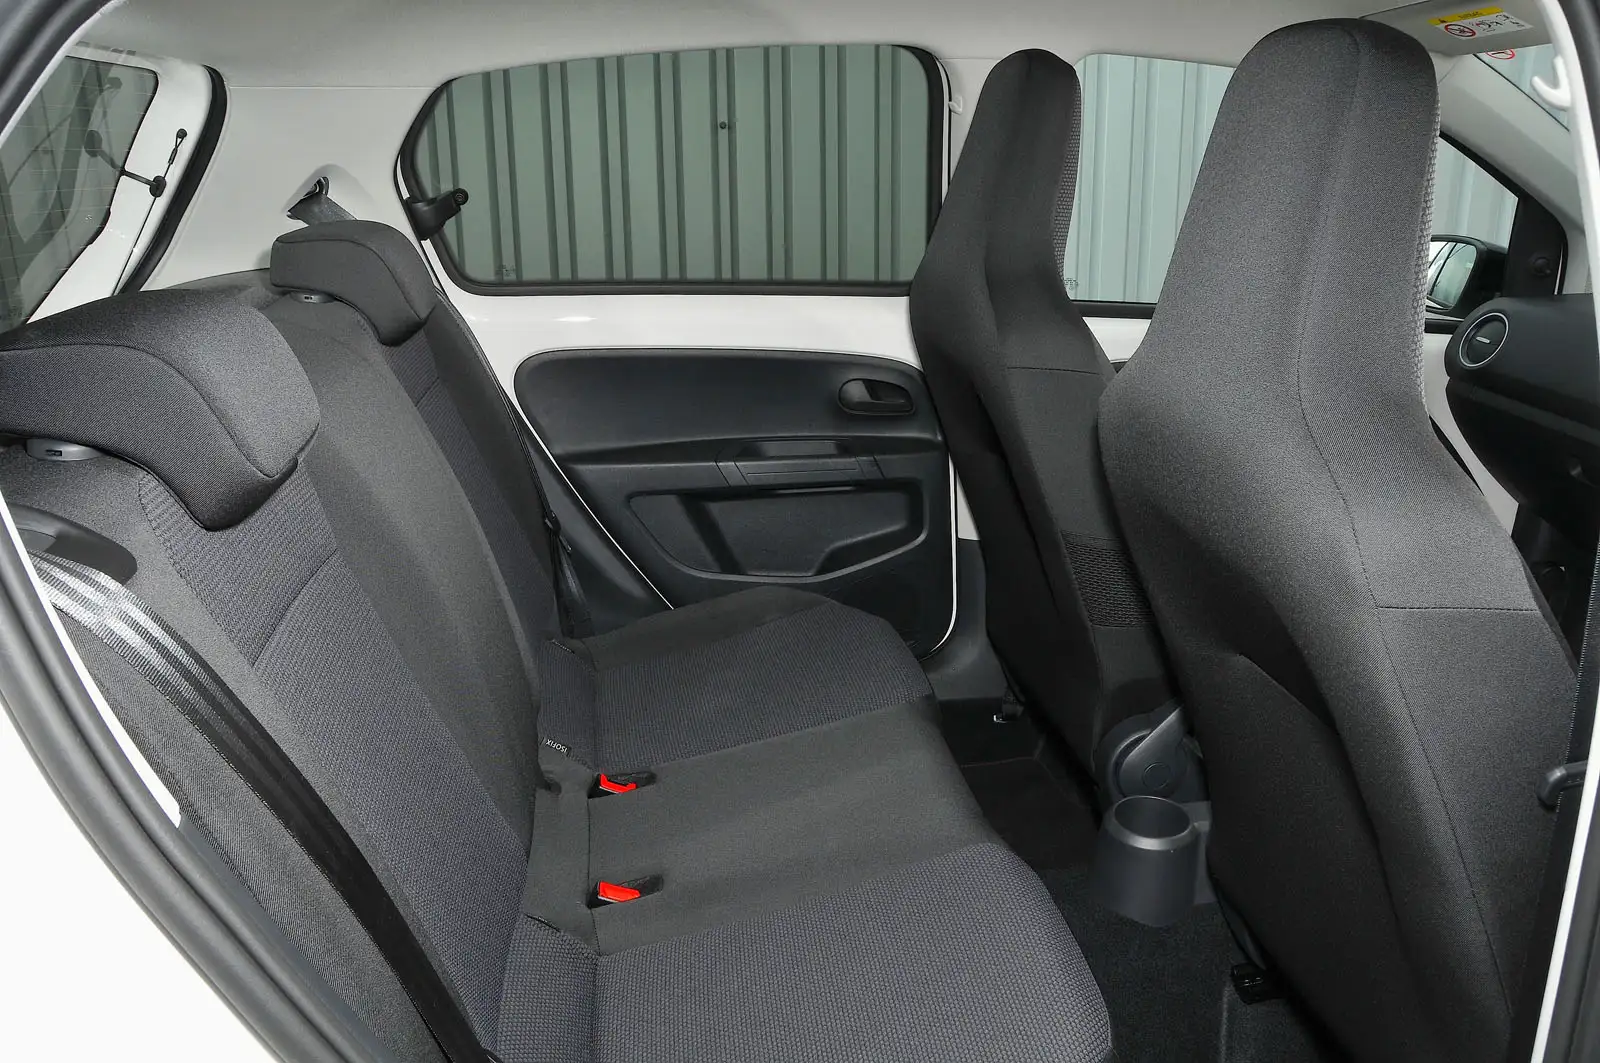 Skoda Citigo interior - Seats